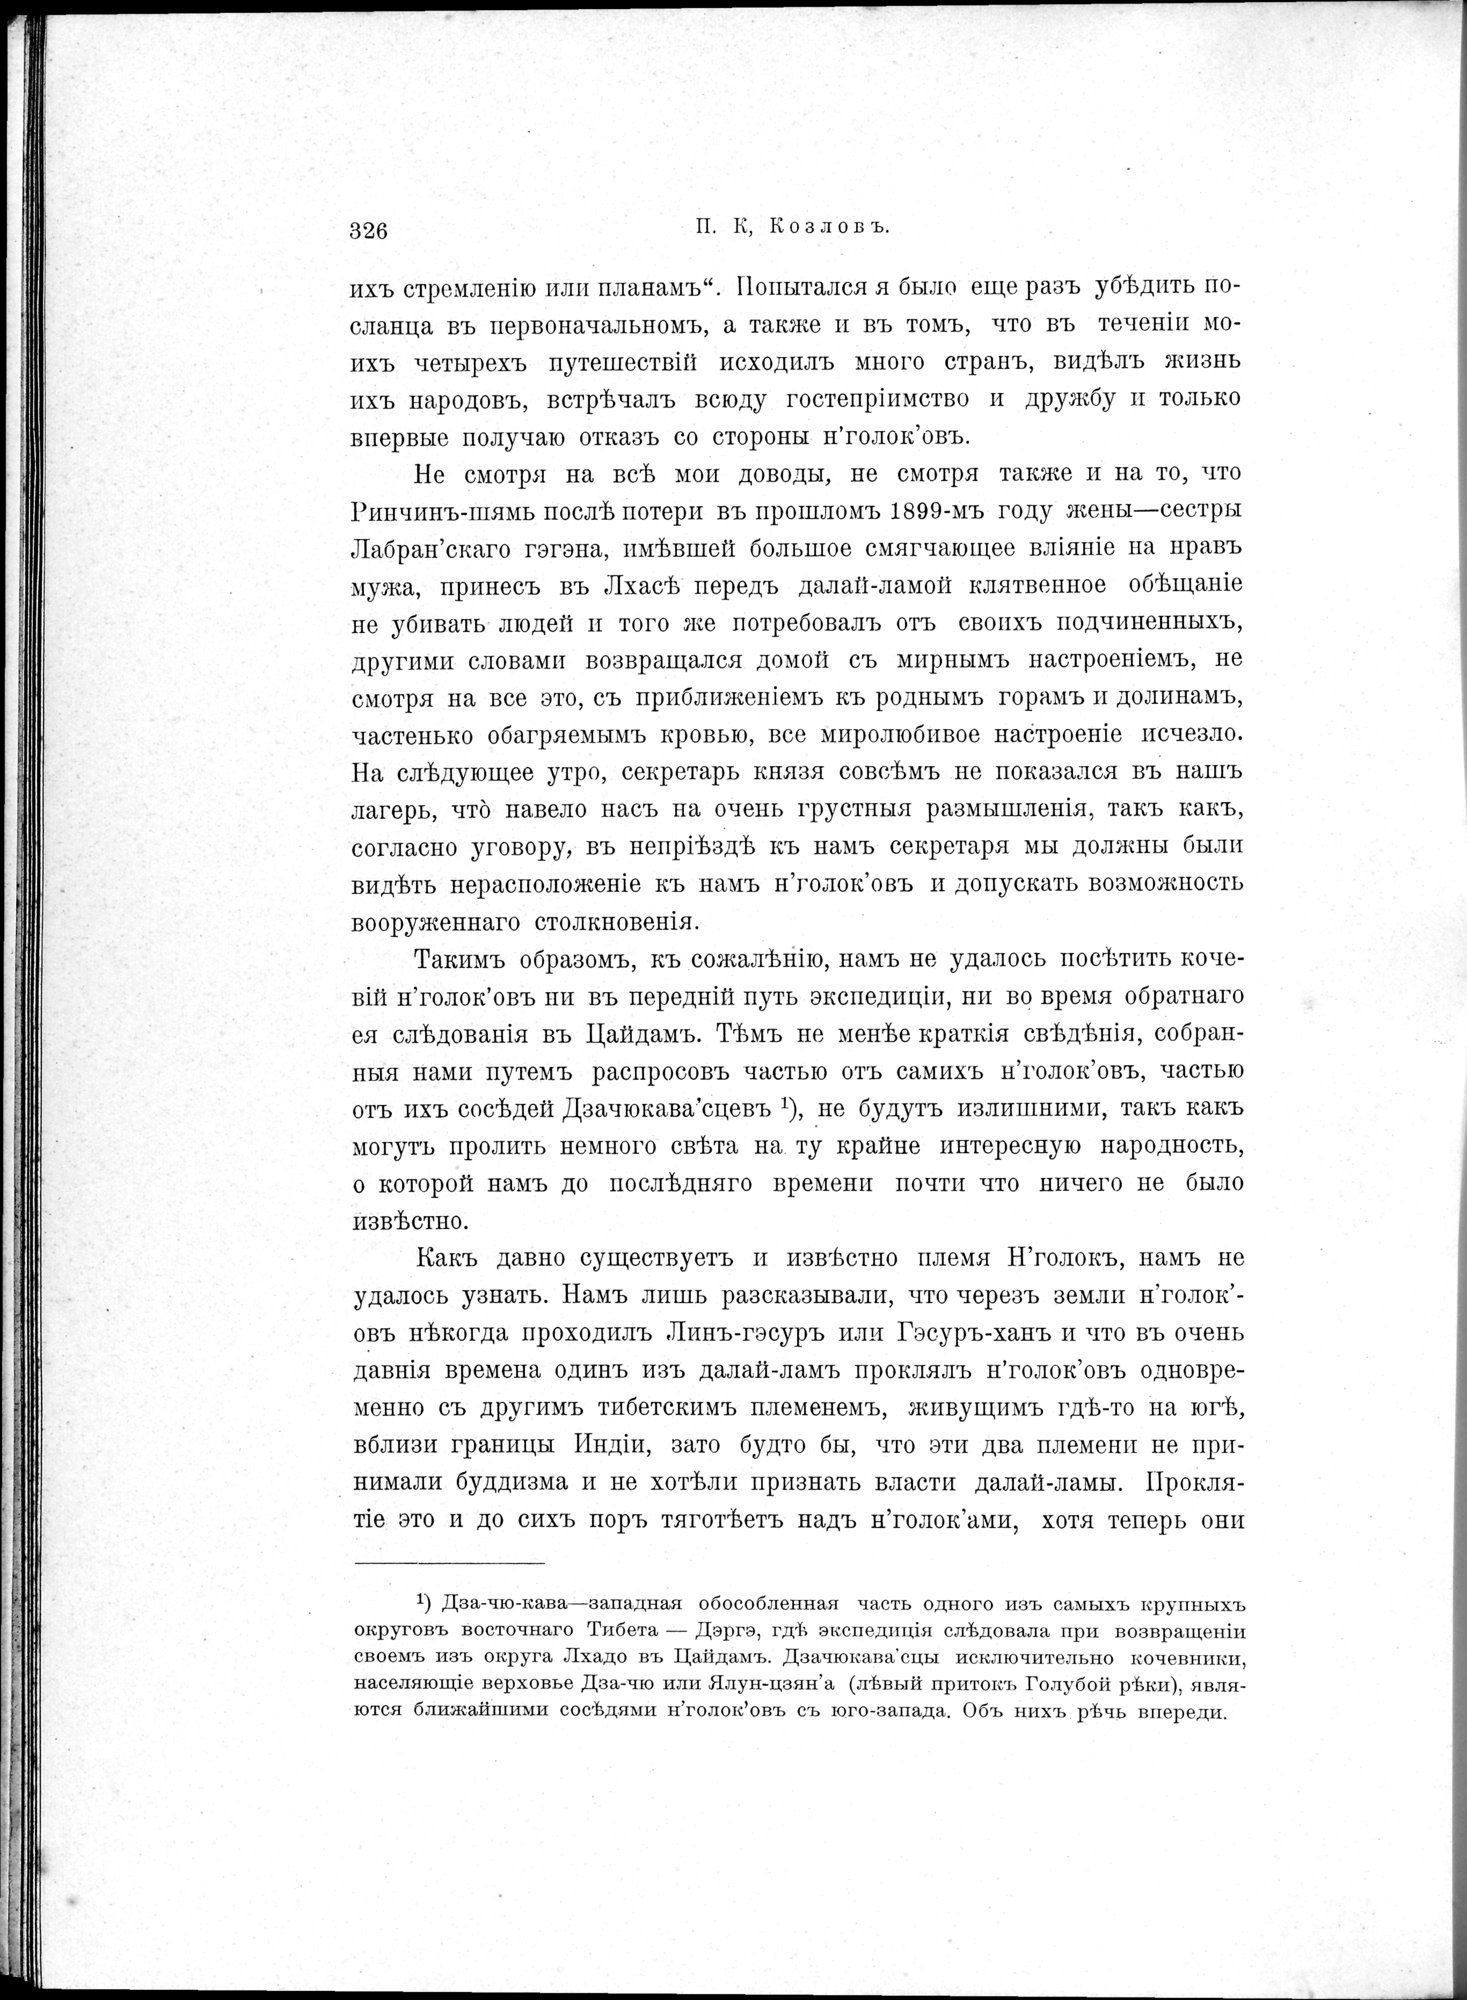 Mongoliia i Kam : vol.2 / Page 96 (Grayscale High Resolution Image)